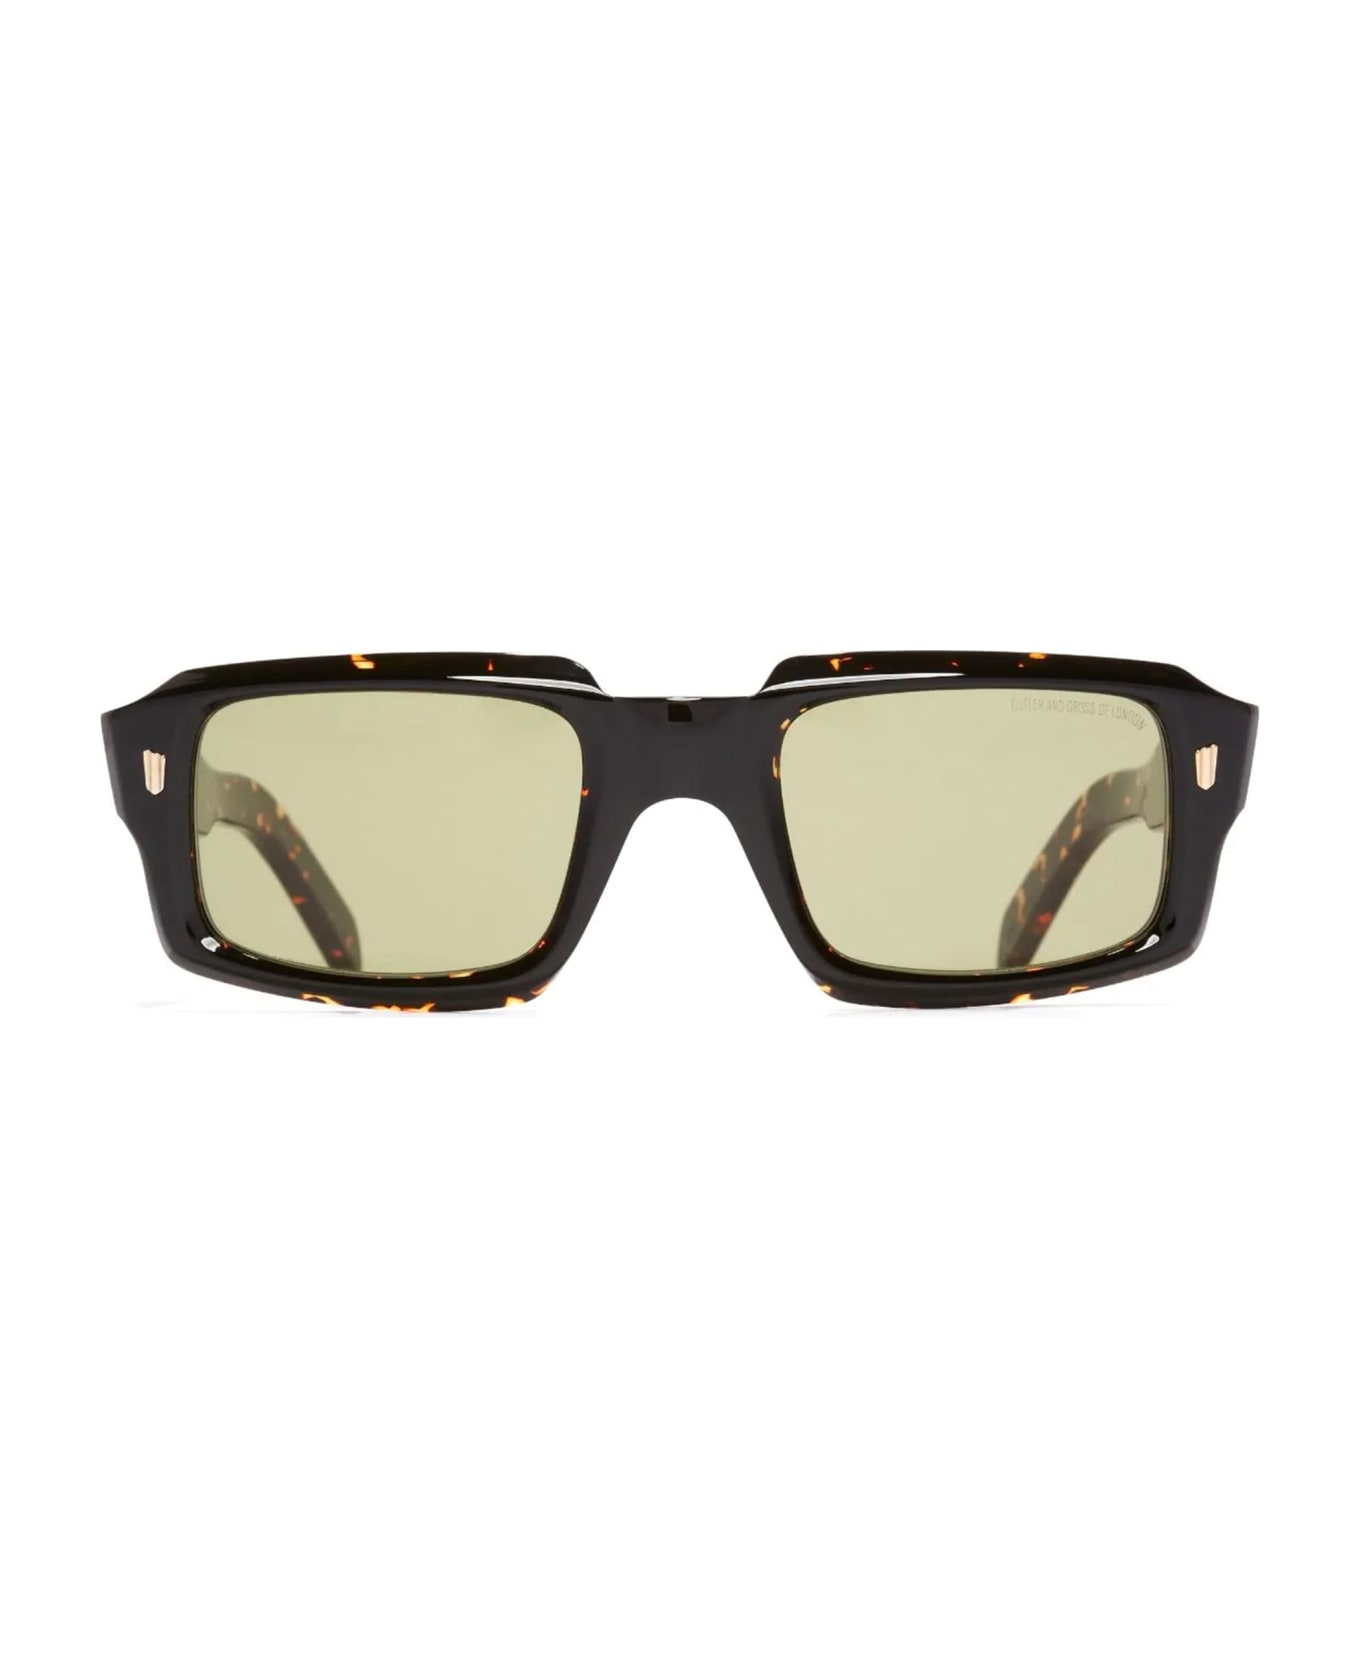 Cutler and Gross 9495 / Black On Havana Sunglasses - Black